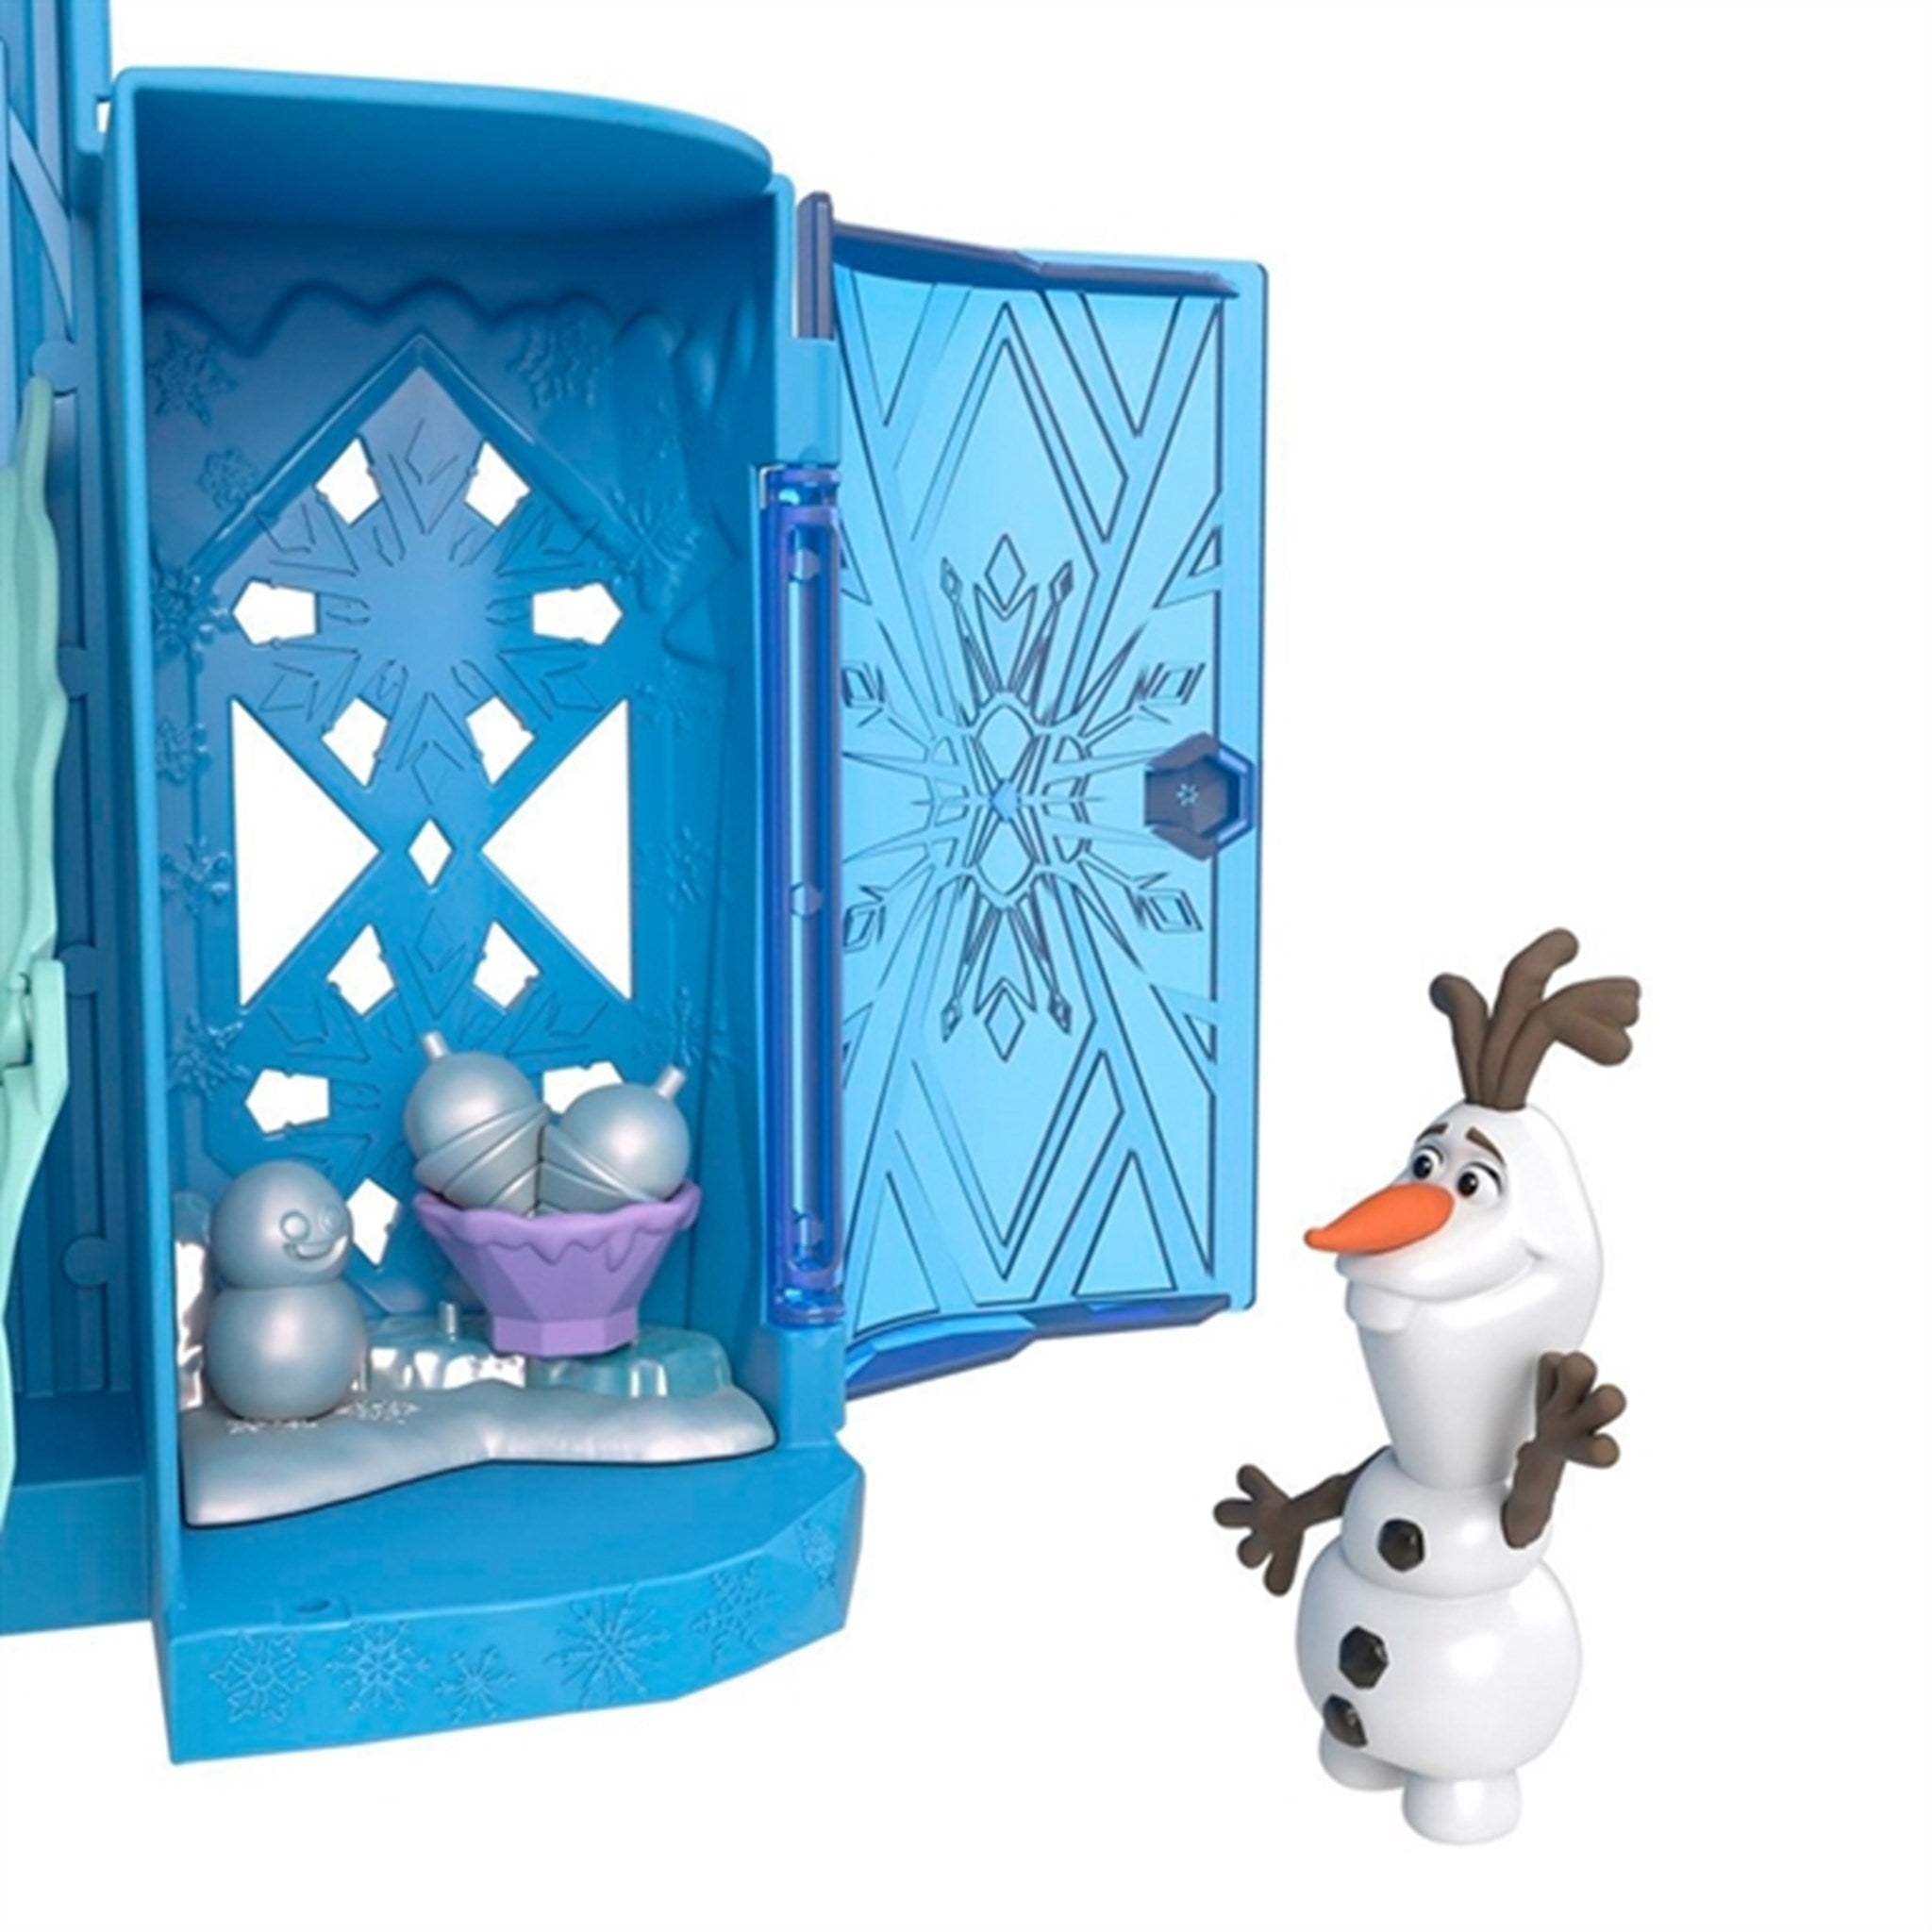 Disney Frozen Elsa's Ice Castle Playset 3